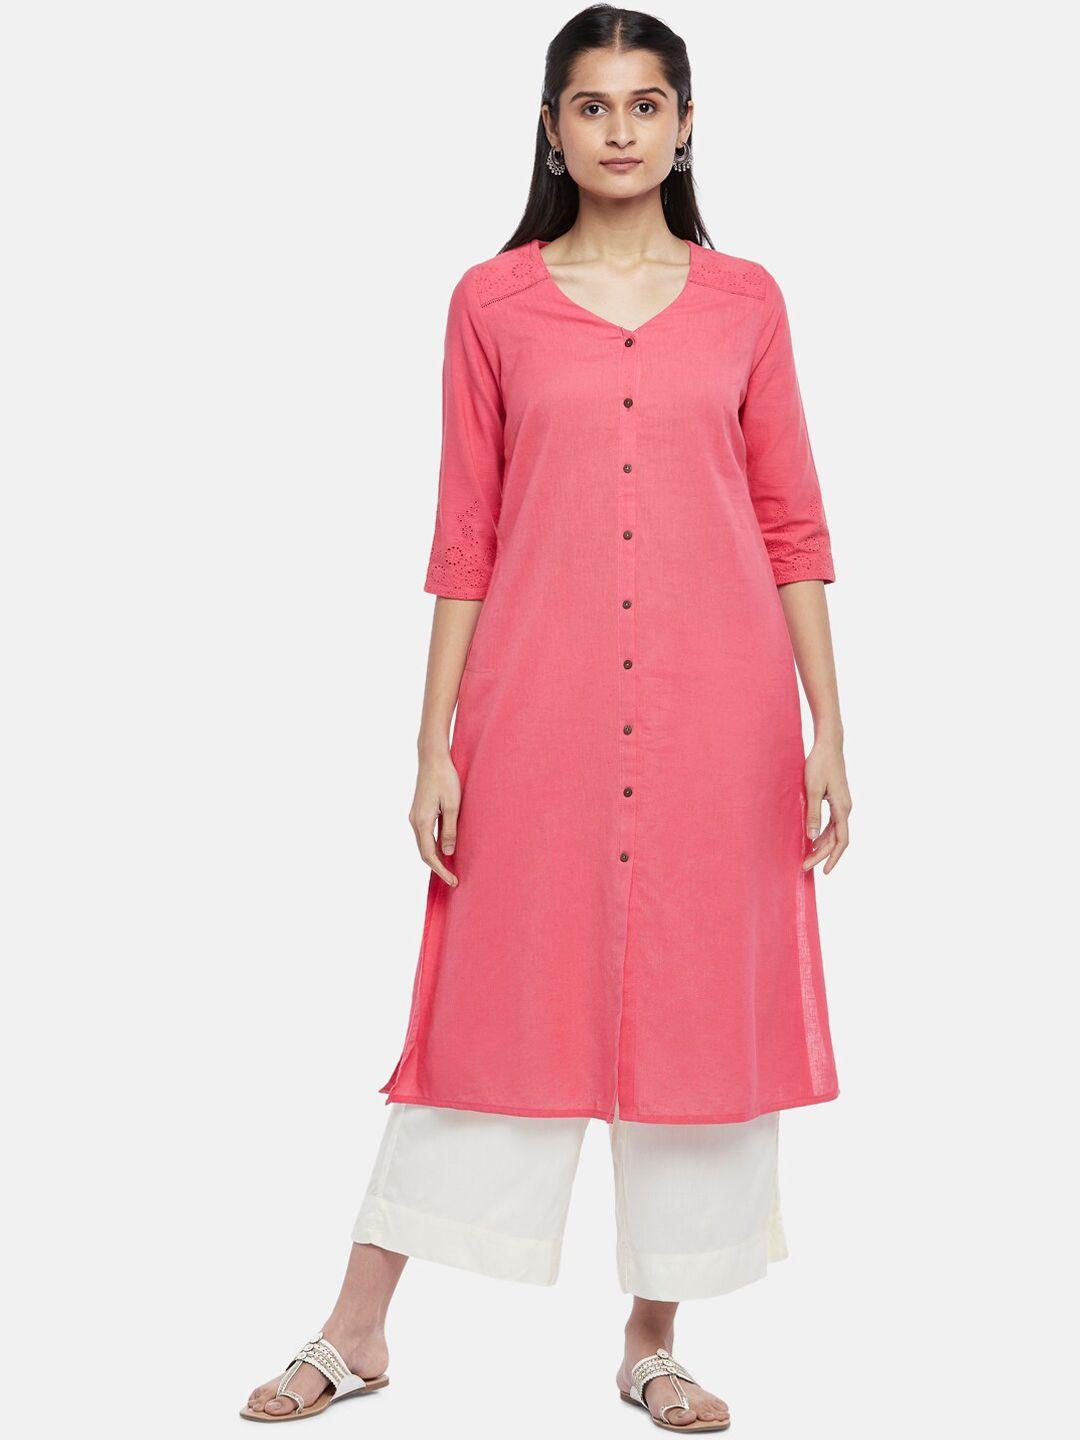 rangmanch by pantaloons women pink kurta